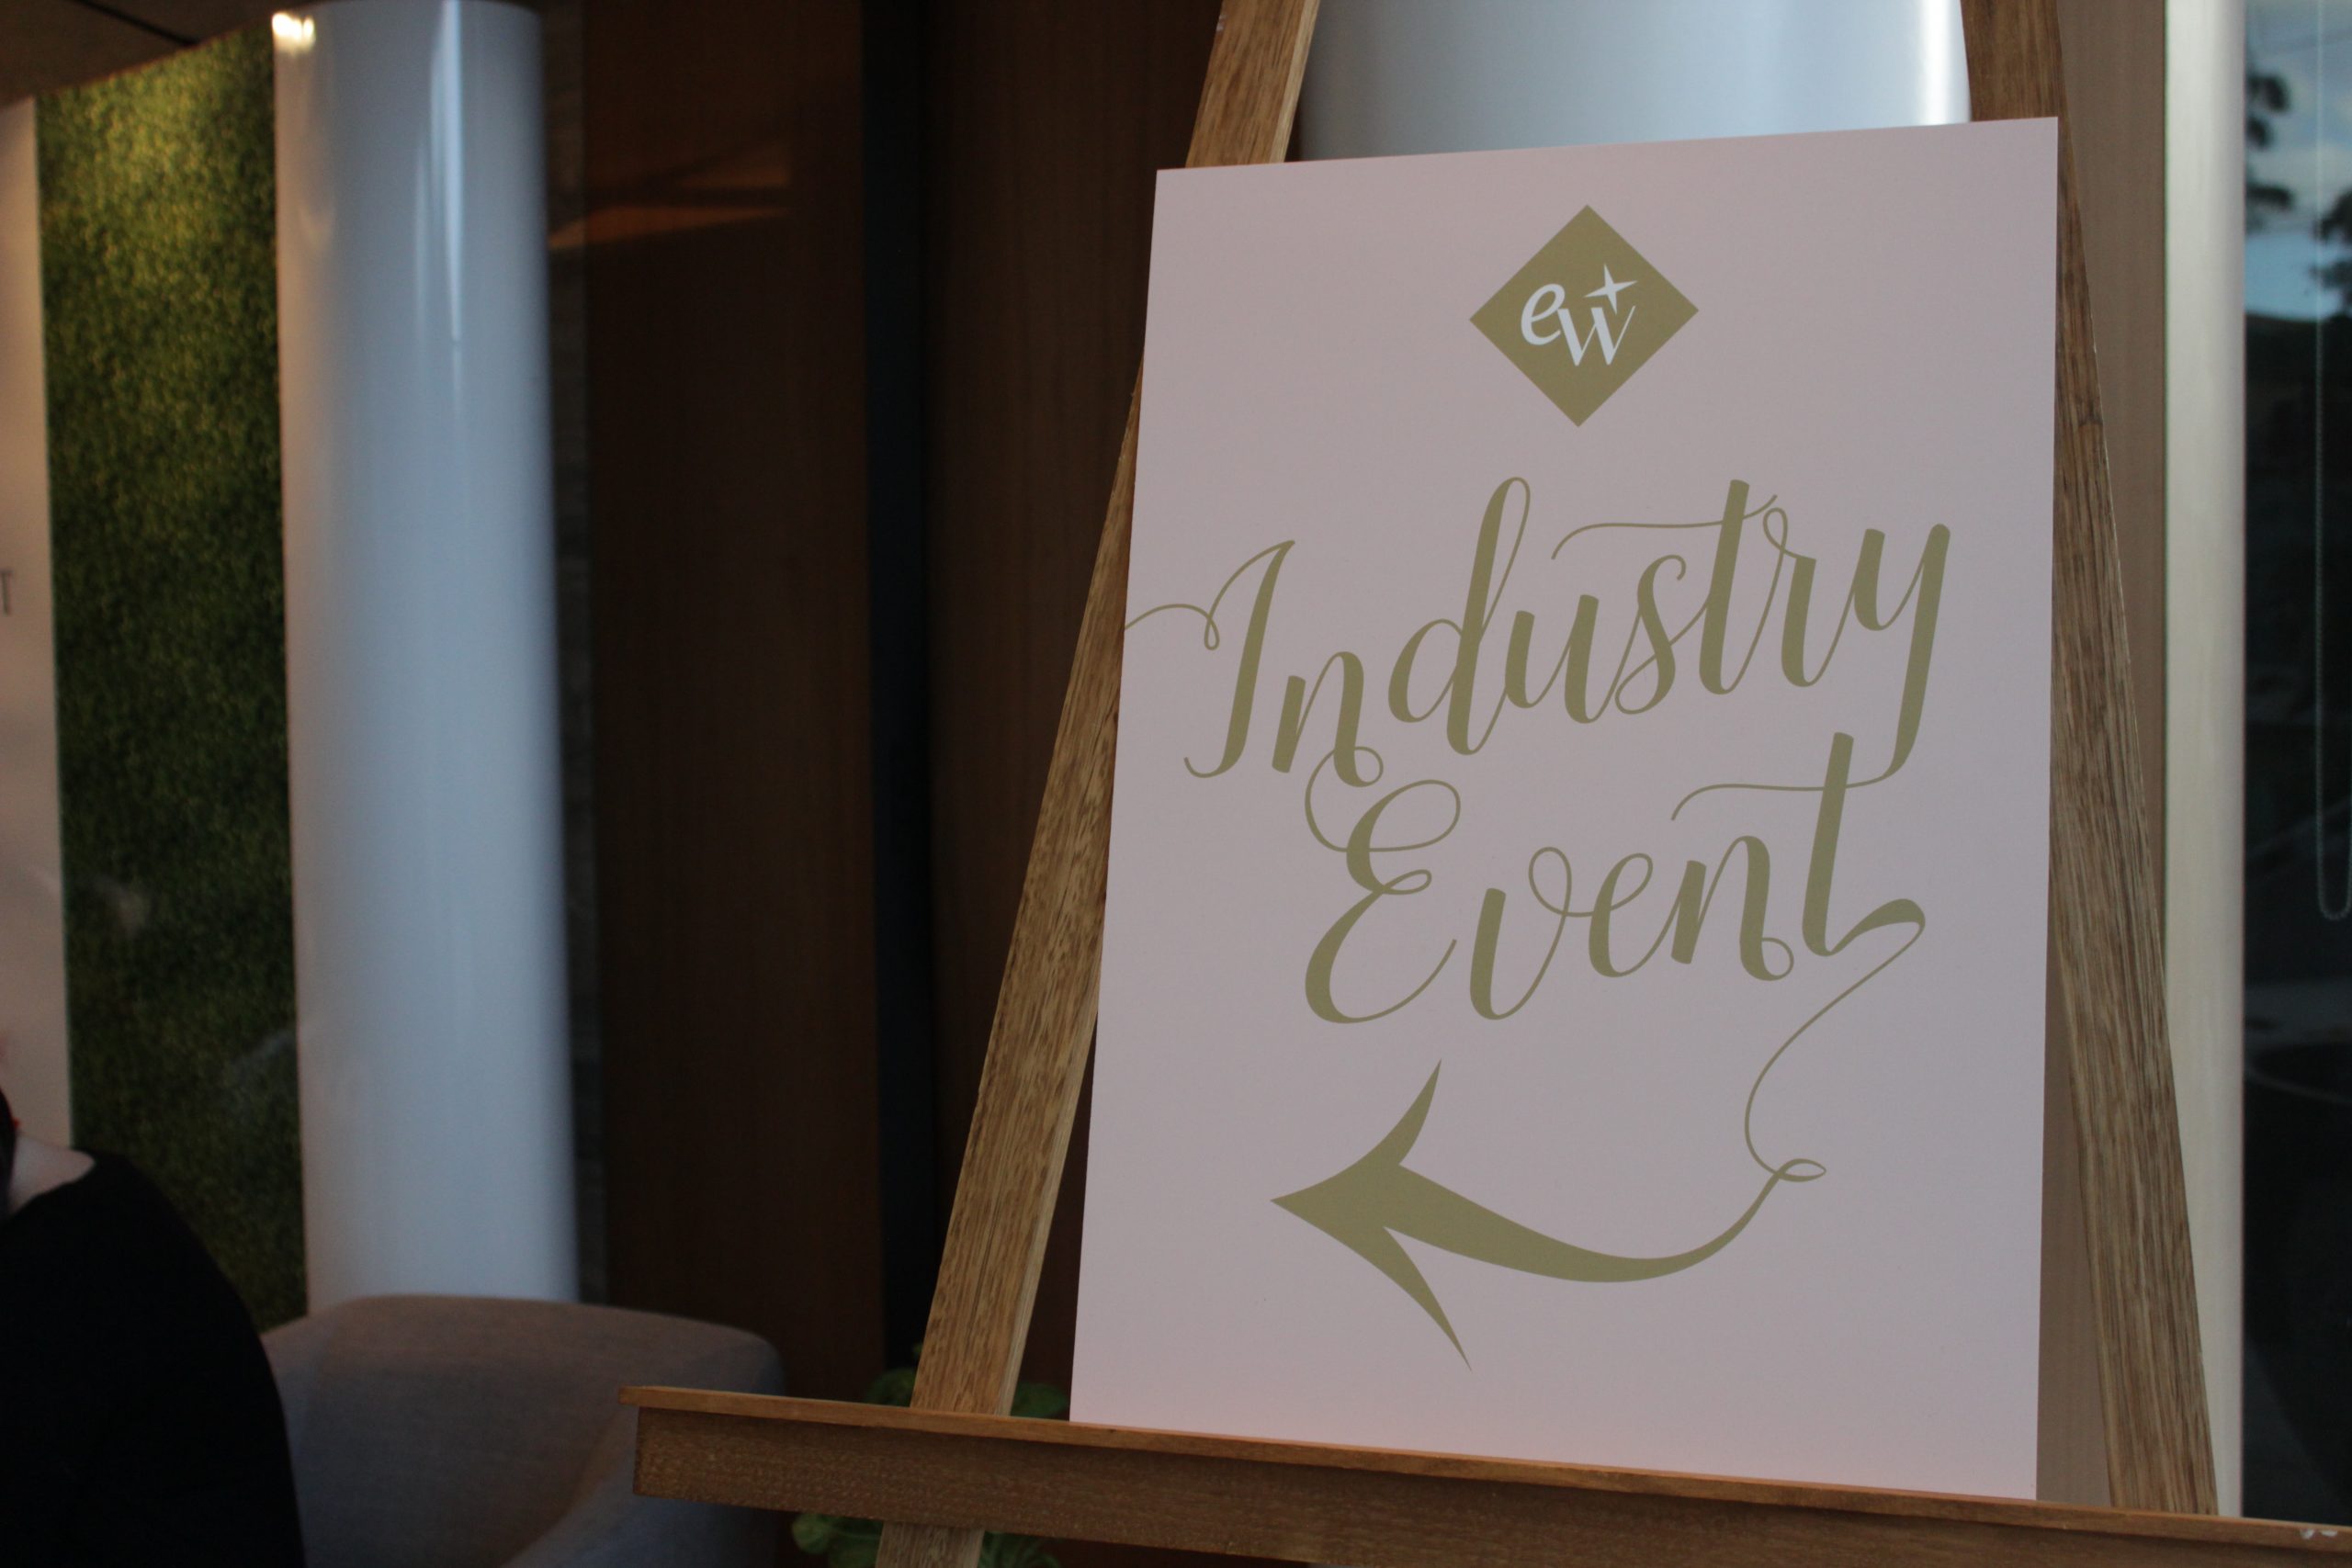 wedding industry event